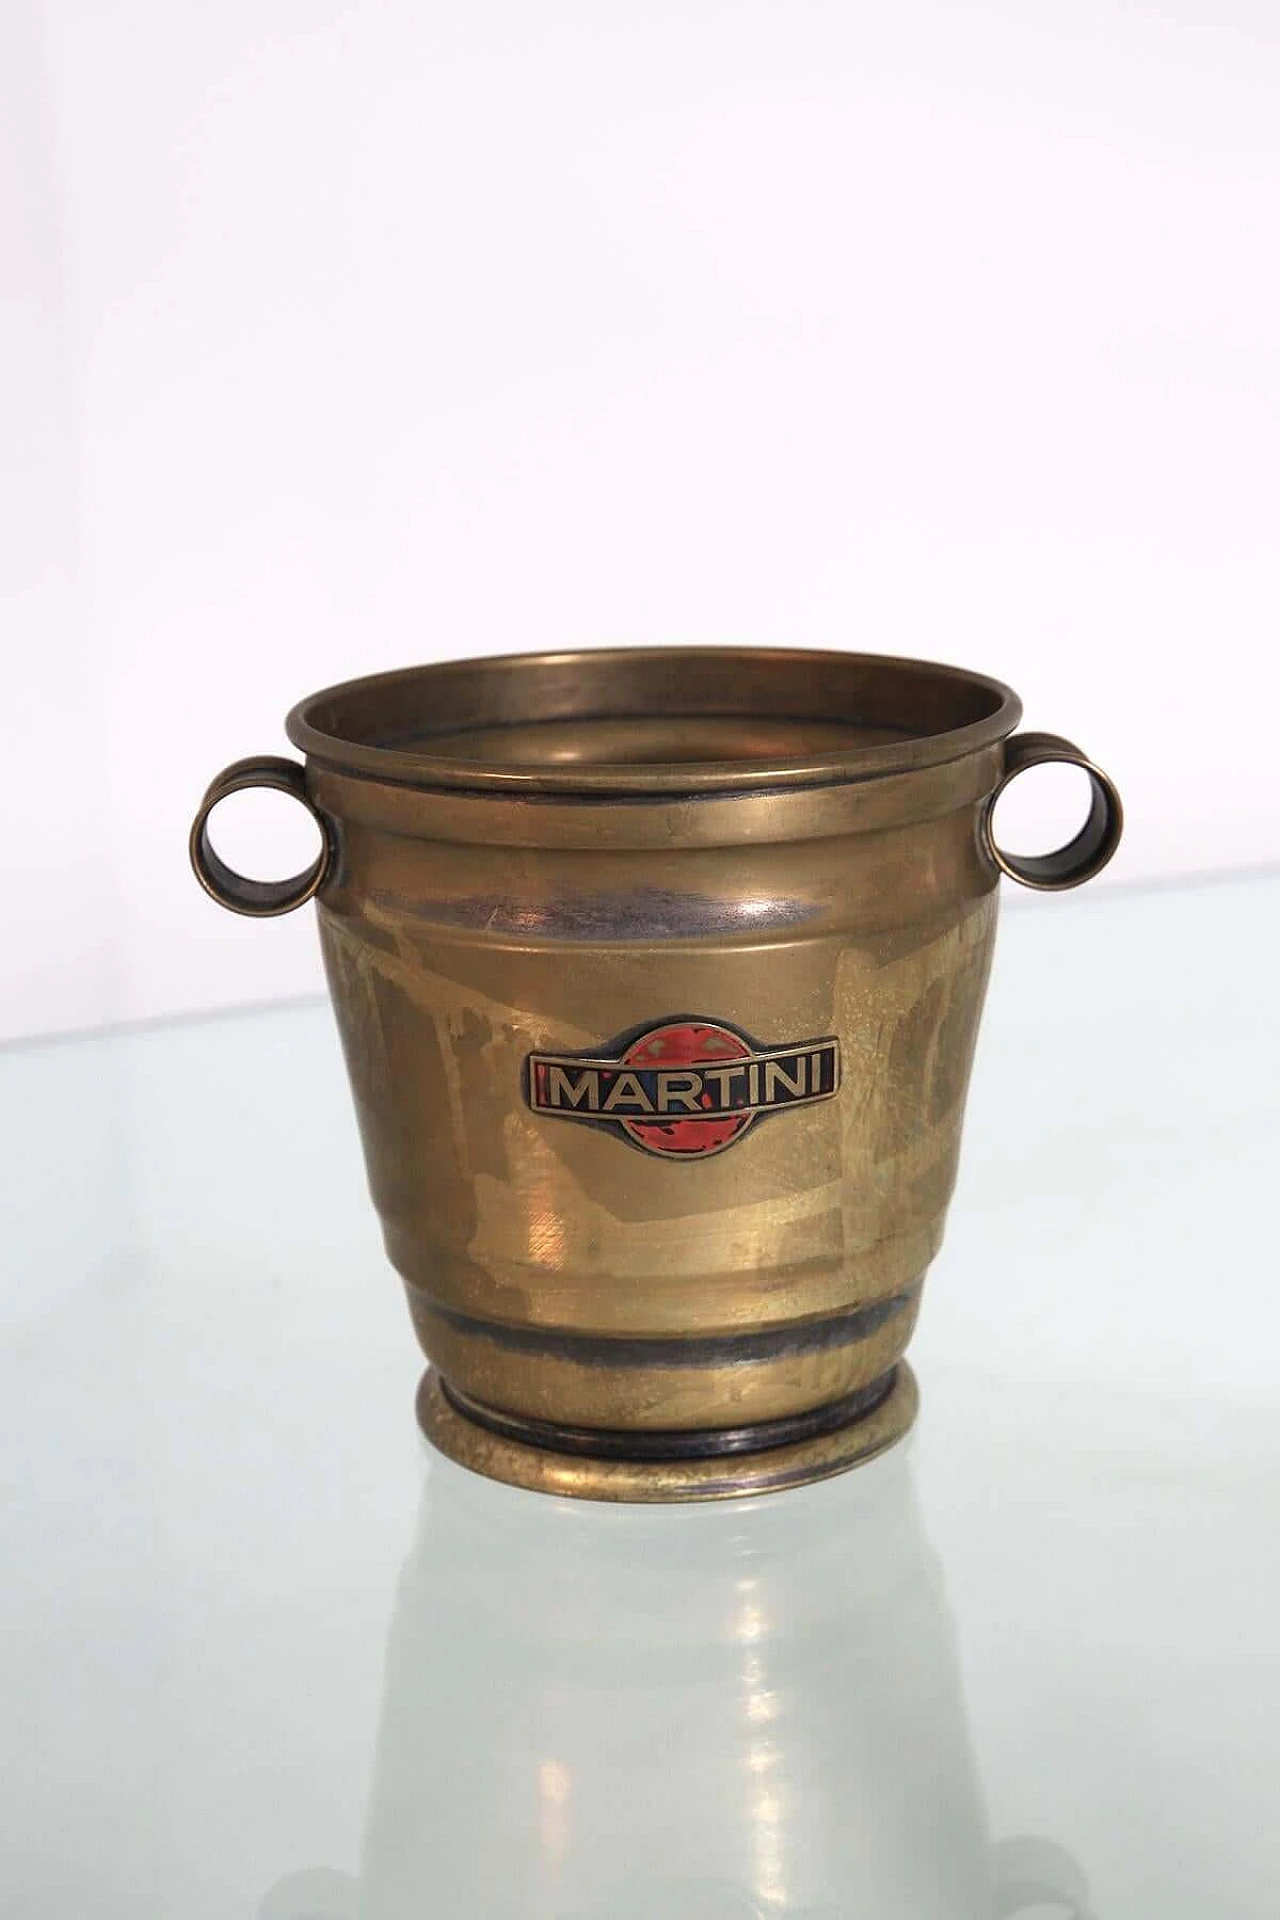 Martini ice bucket with original logo in nickel-plated brass, 1950s 1407853